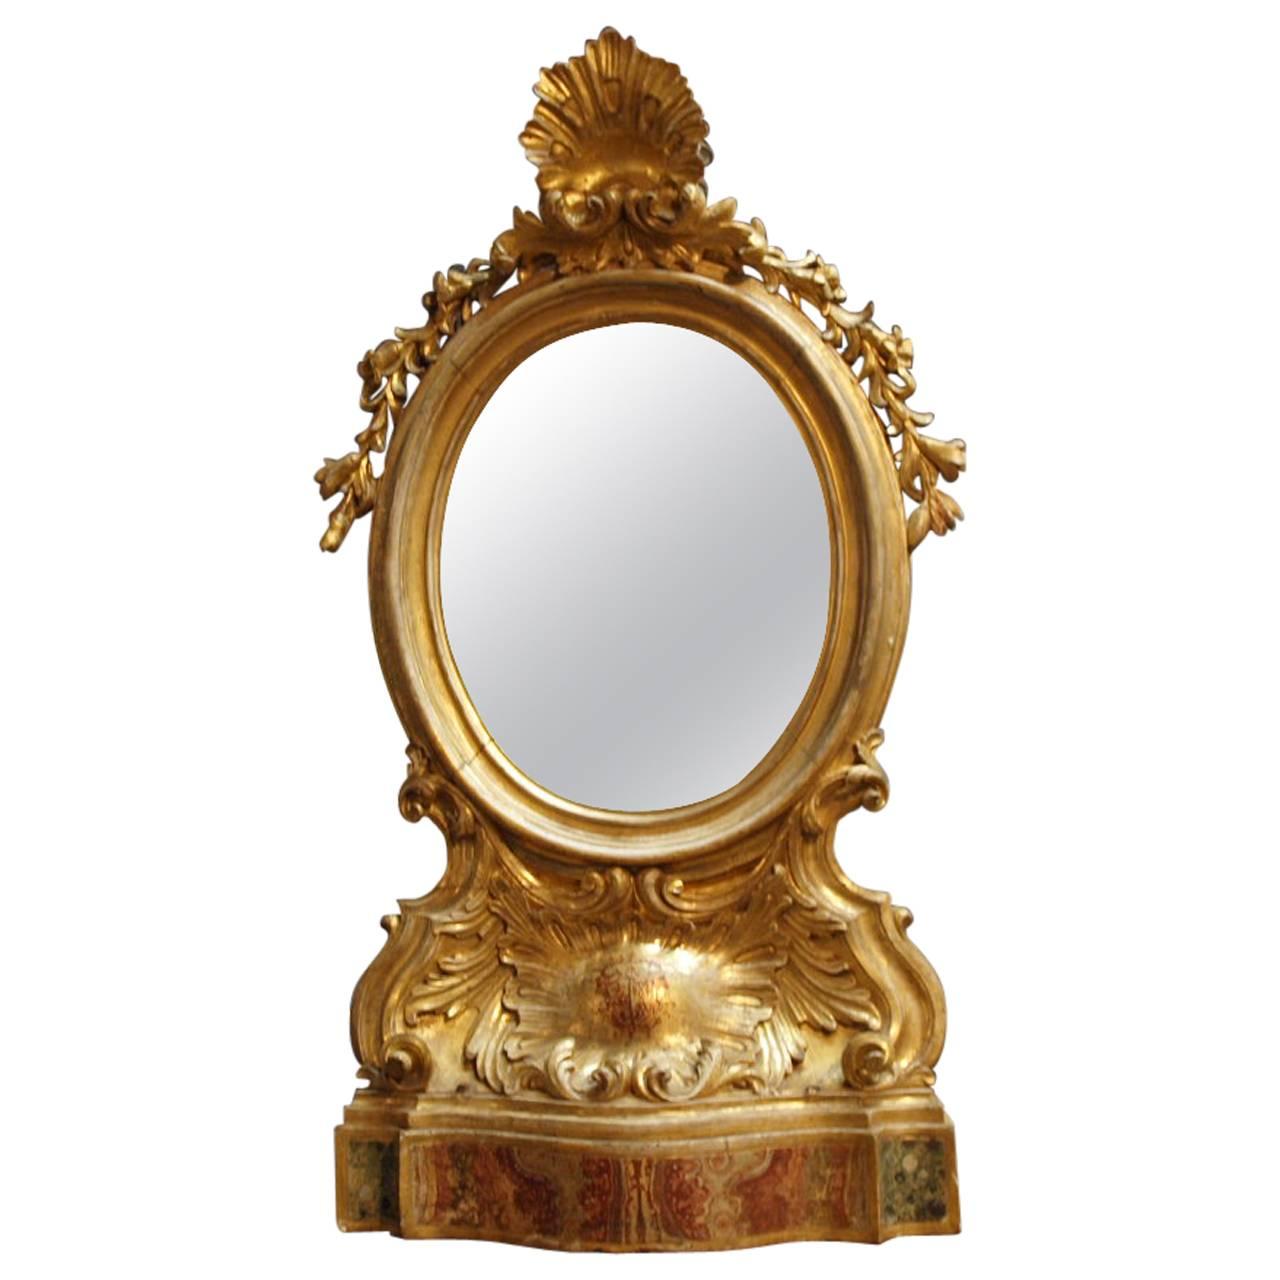 Exceptional 18th Century Italian Altar Frame Mirror